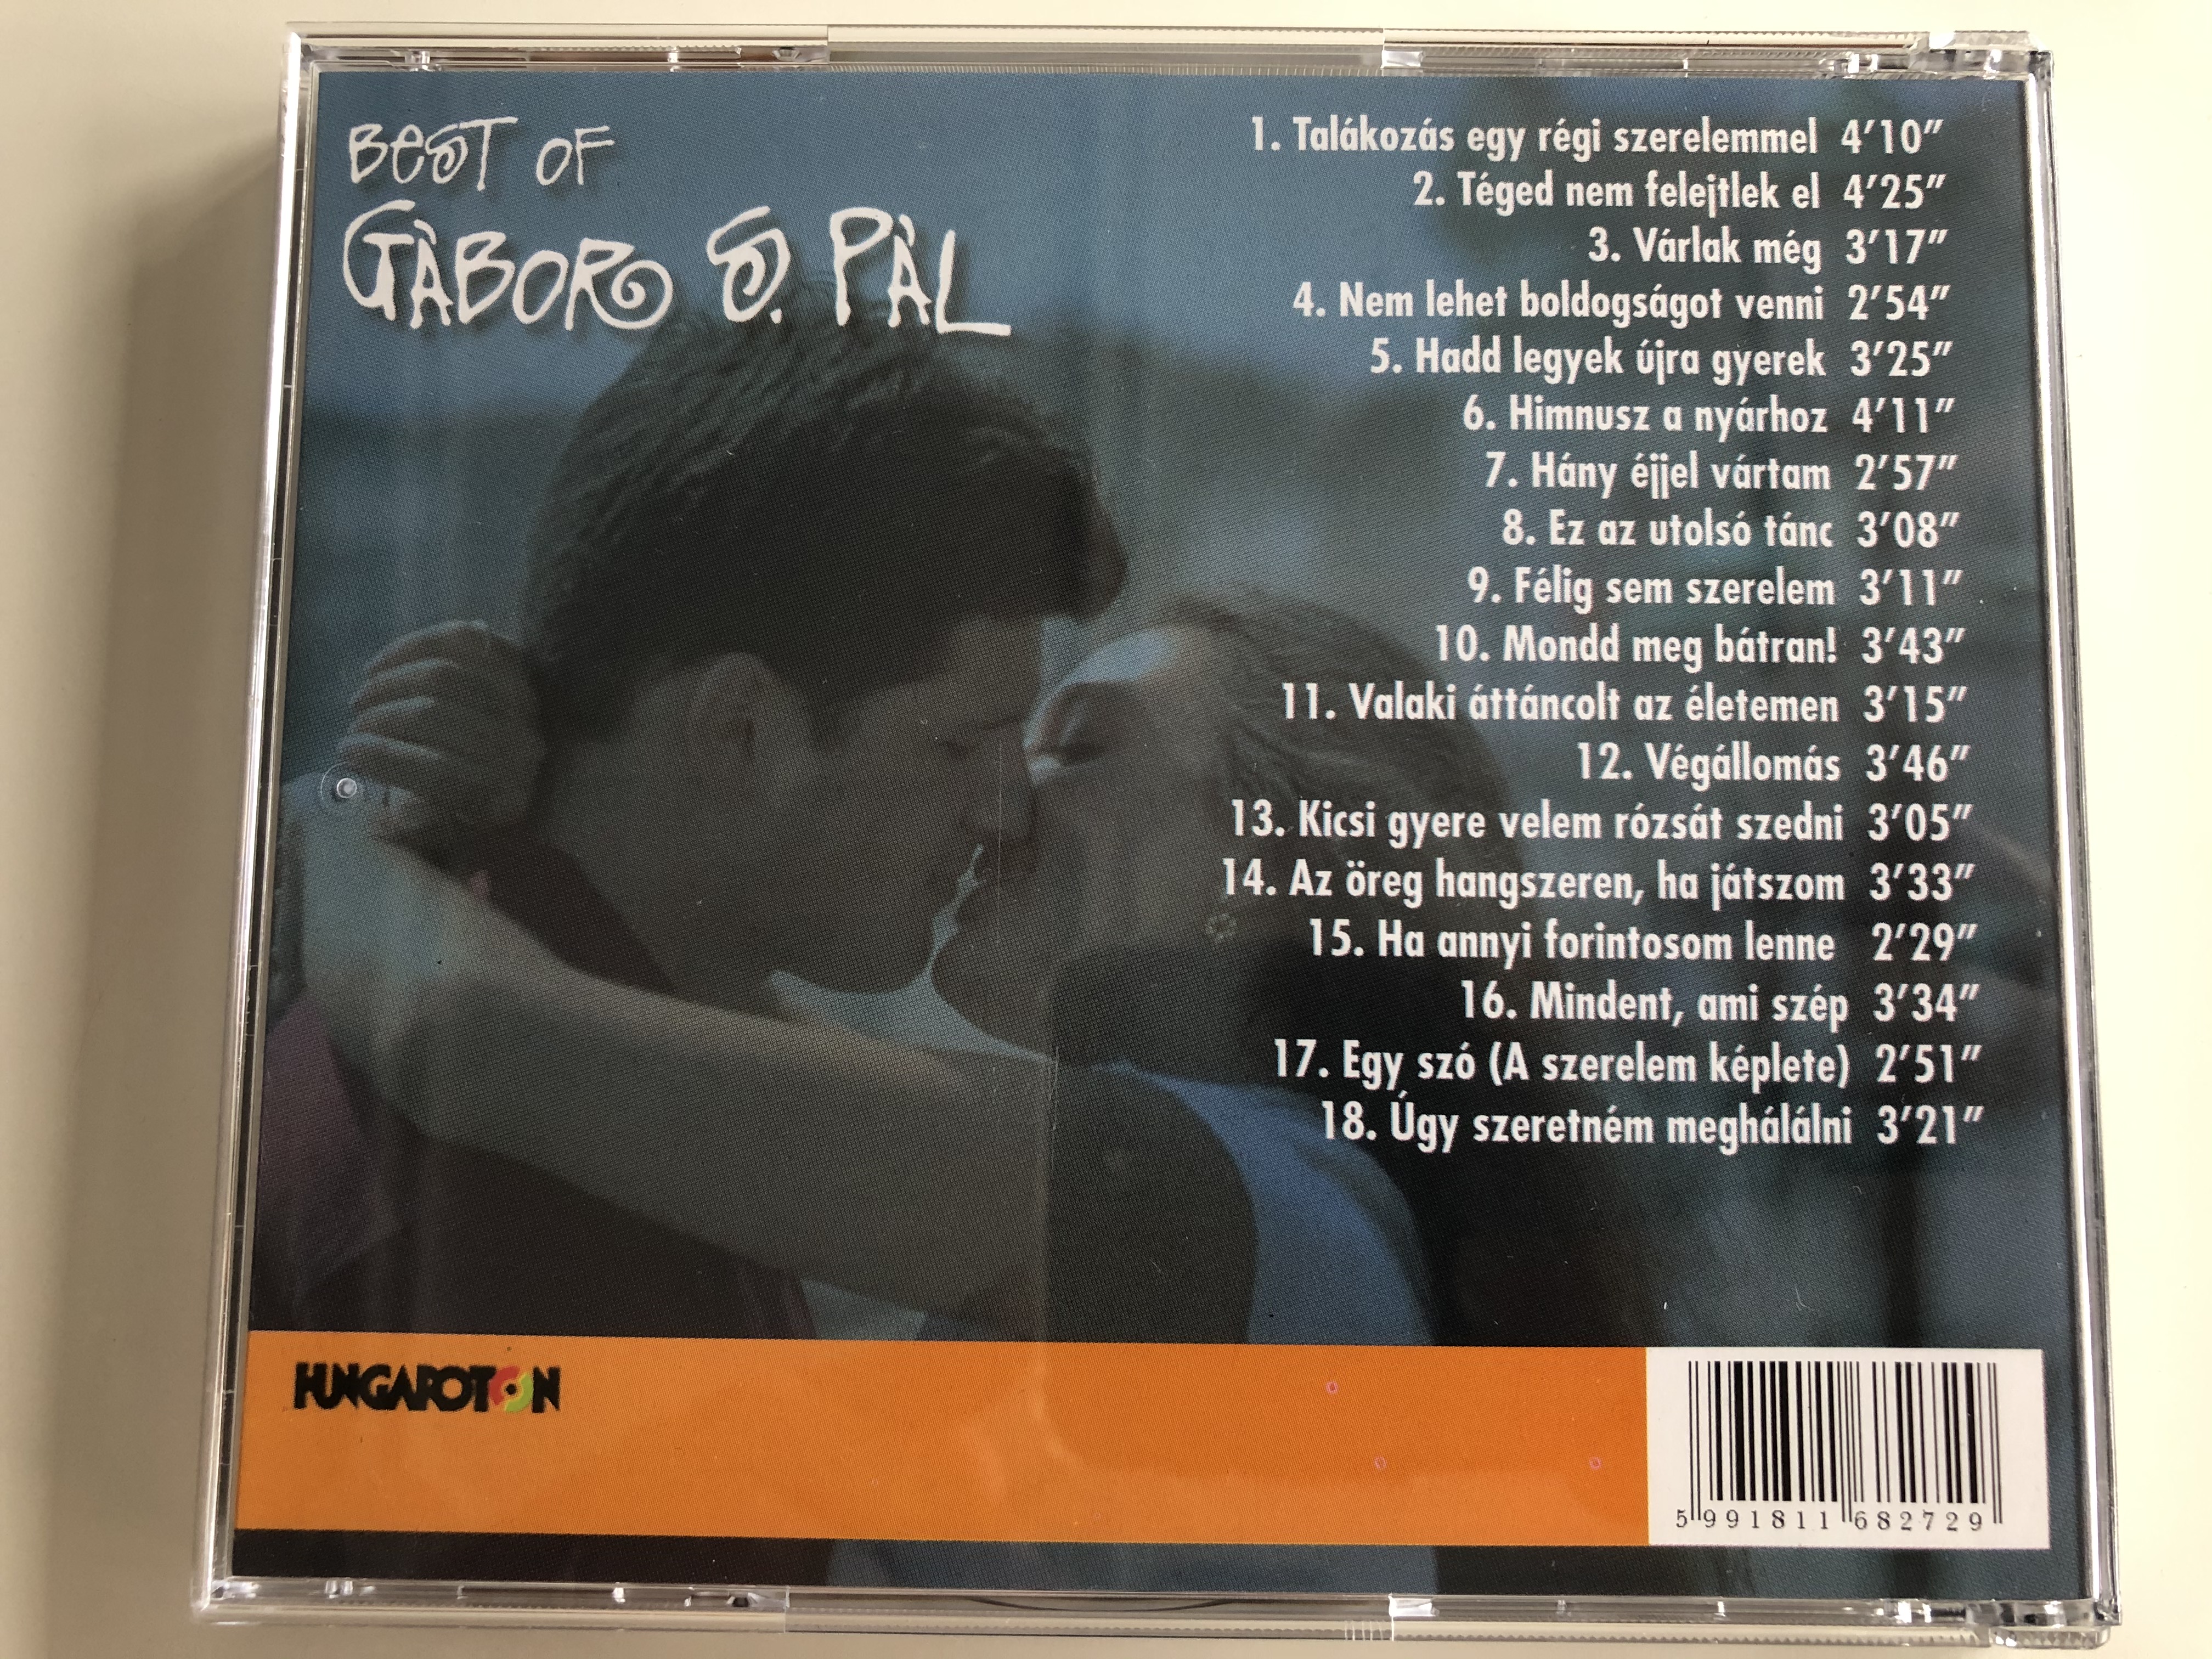 best-of-g-bor-s.-p-l-tal-lkoz-s-egy-r-gi-szerelemmel-hany-ejjel-vartam-gy-szeretn-m-megh-l-lni-nem-lehet-boldogs-got-venni-himnusz-a-ny-rhoz-hungaroton-audio-cd-1998-hcd-16827-7-.jpg